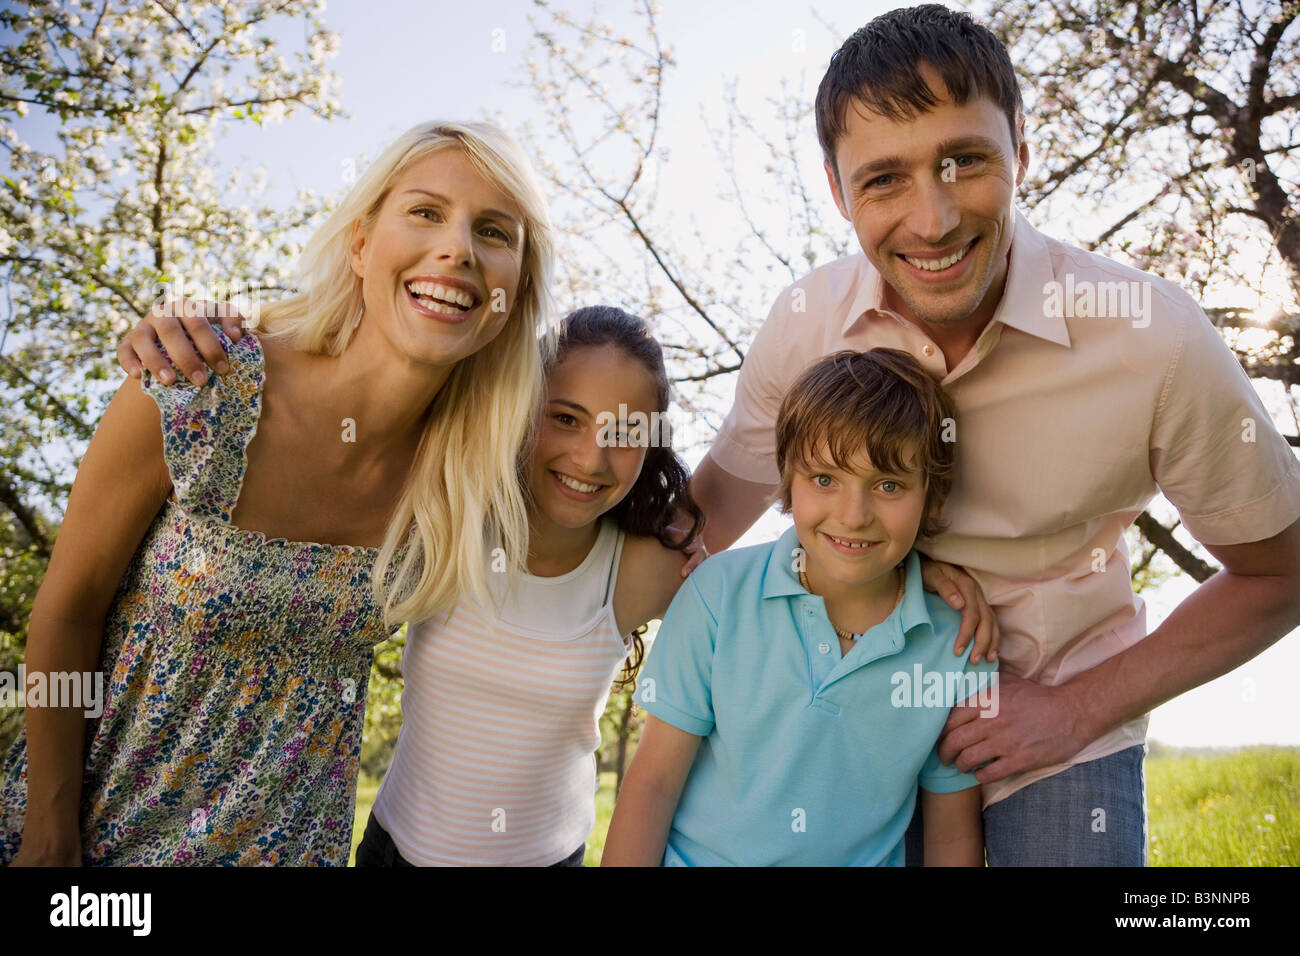 Germany, Baden Württemberg, Tübingen, Family portrait, smiling, close-up Stock Photo